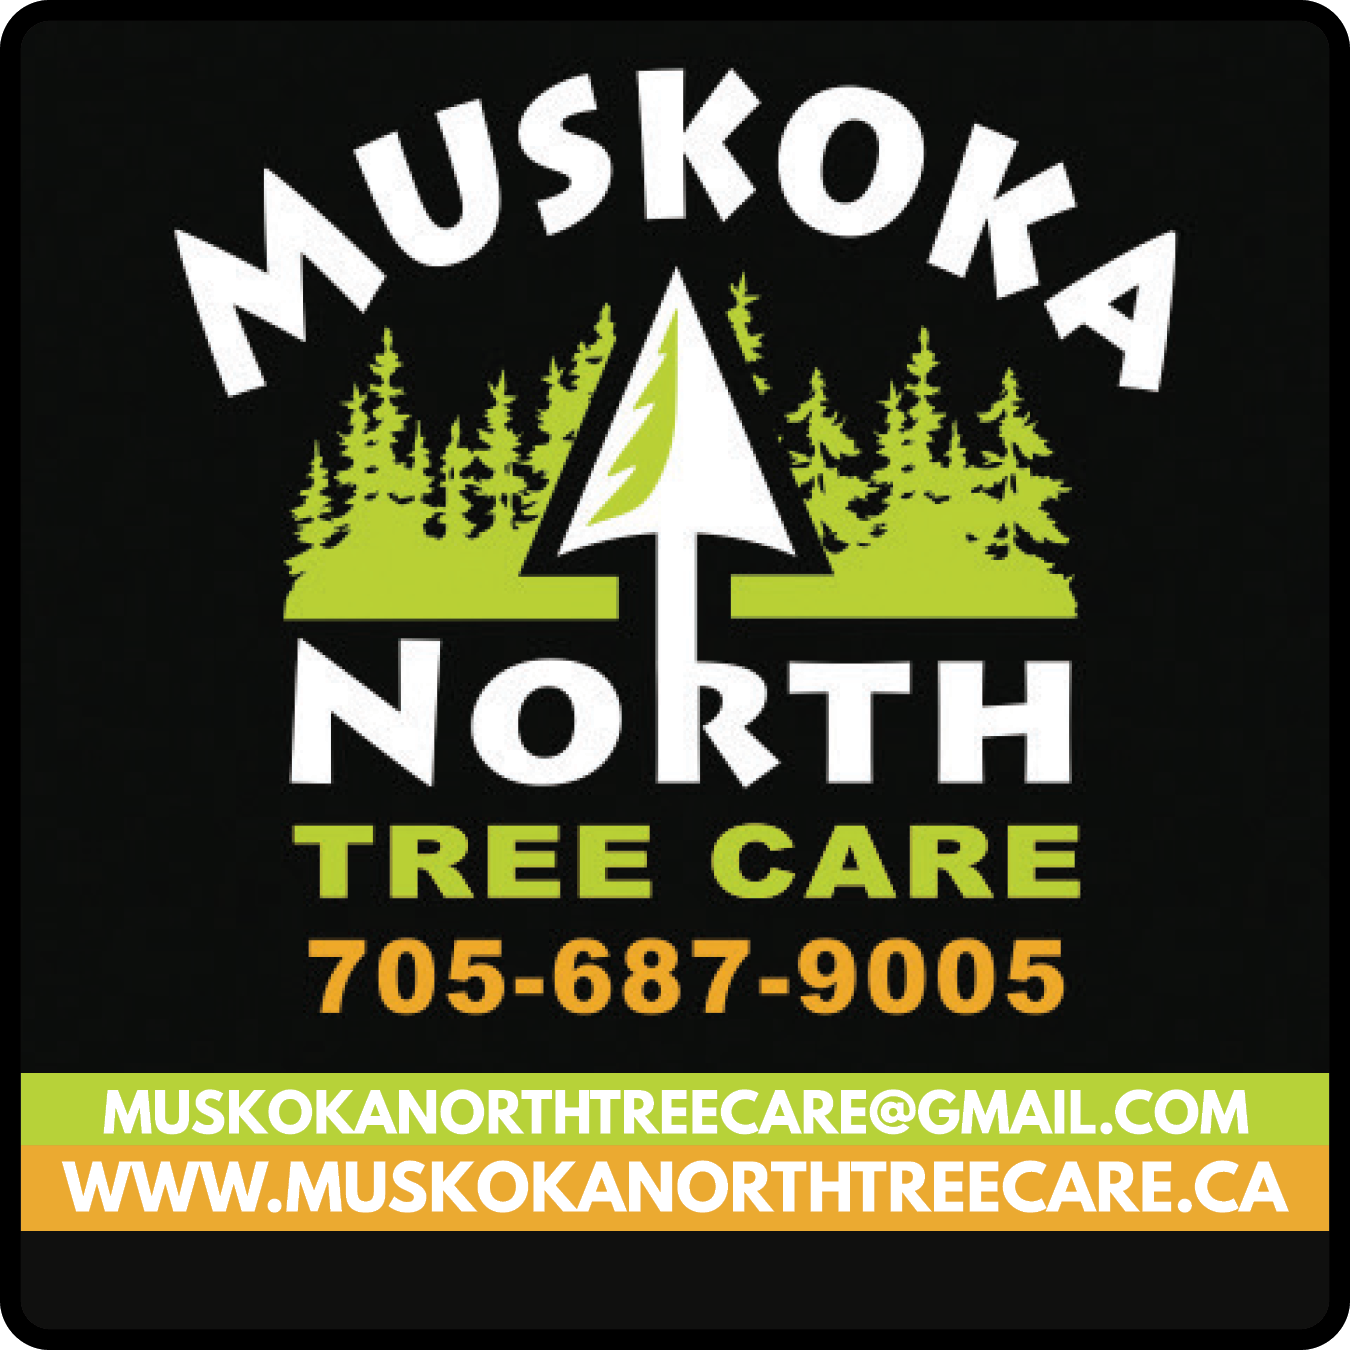 Muskoka North Tree Care